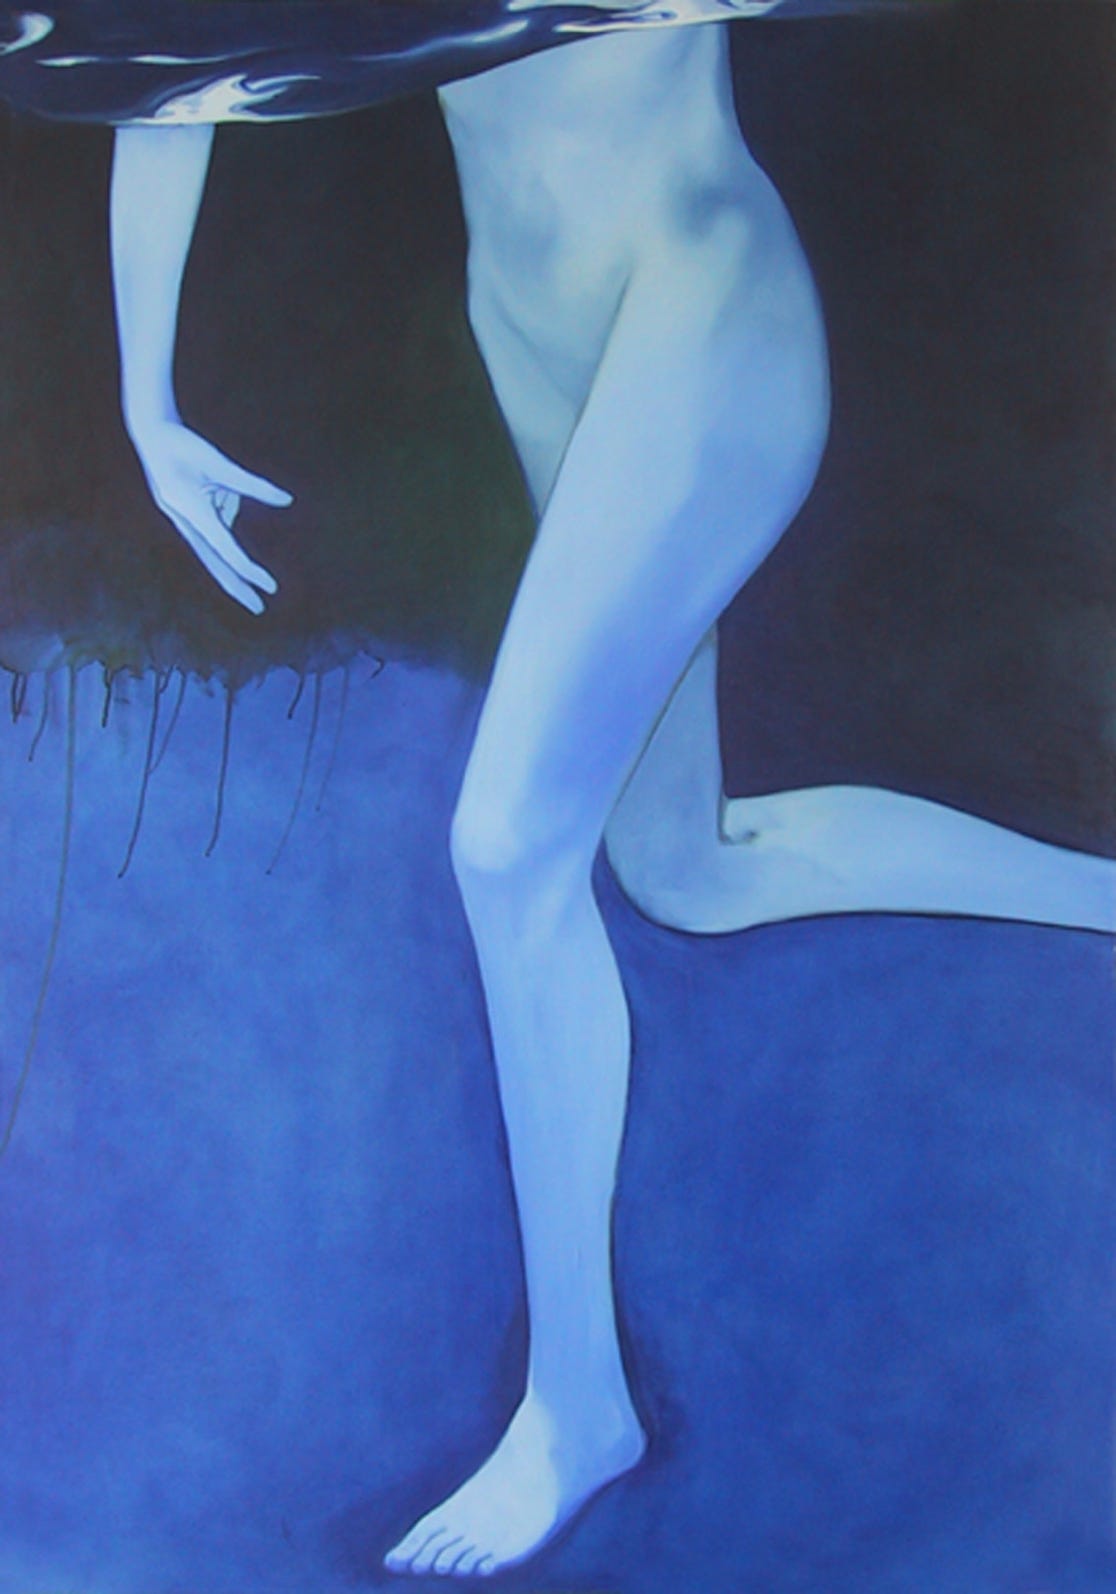 150x105 cm, oil on canvas, 2003